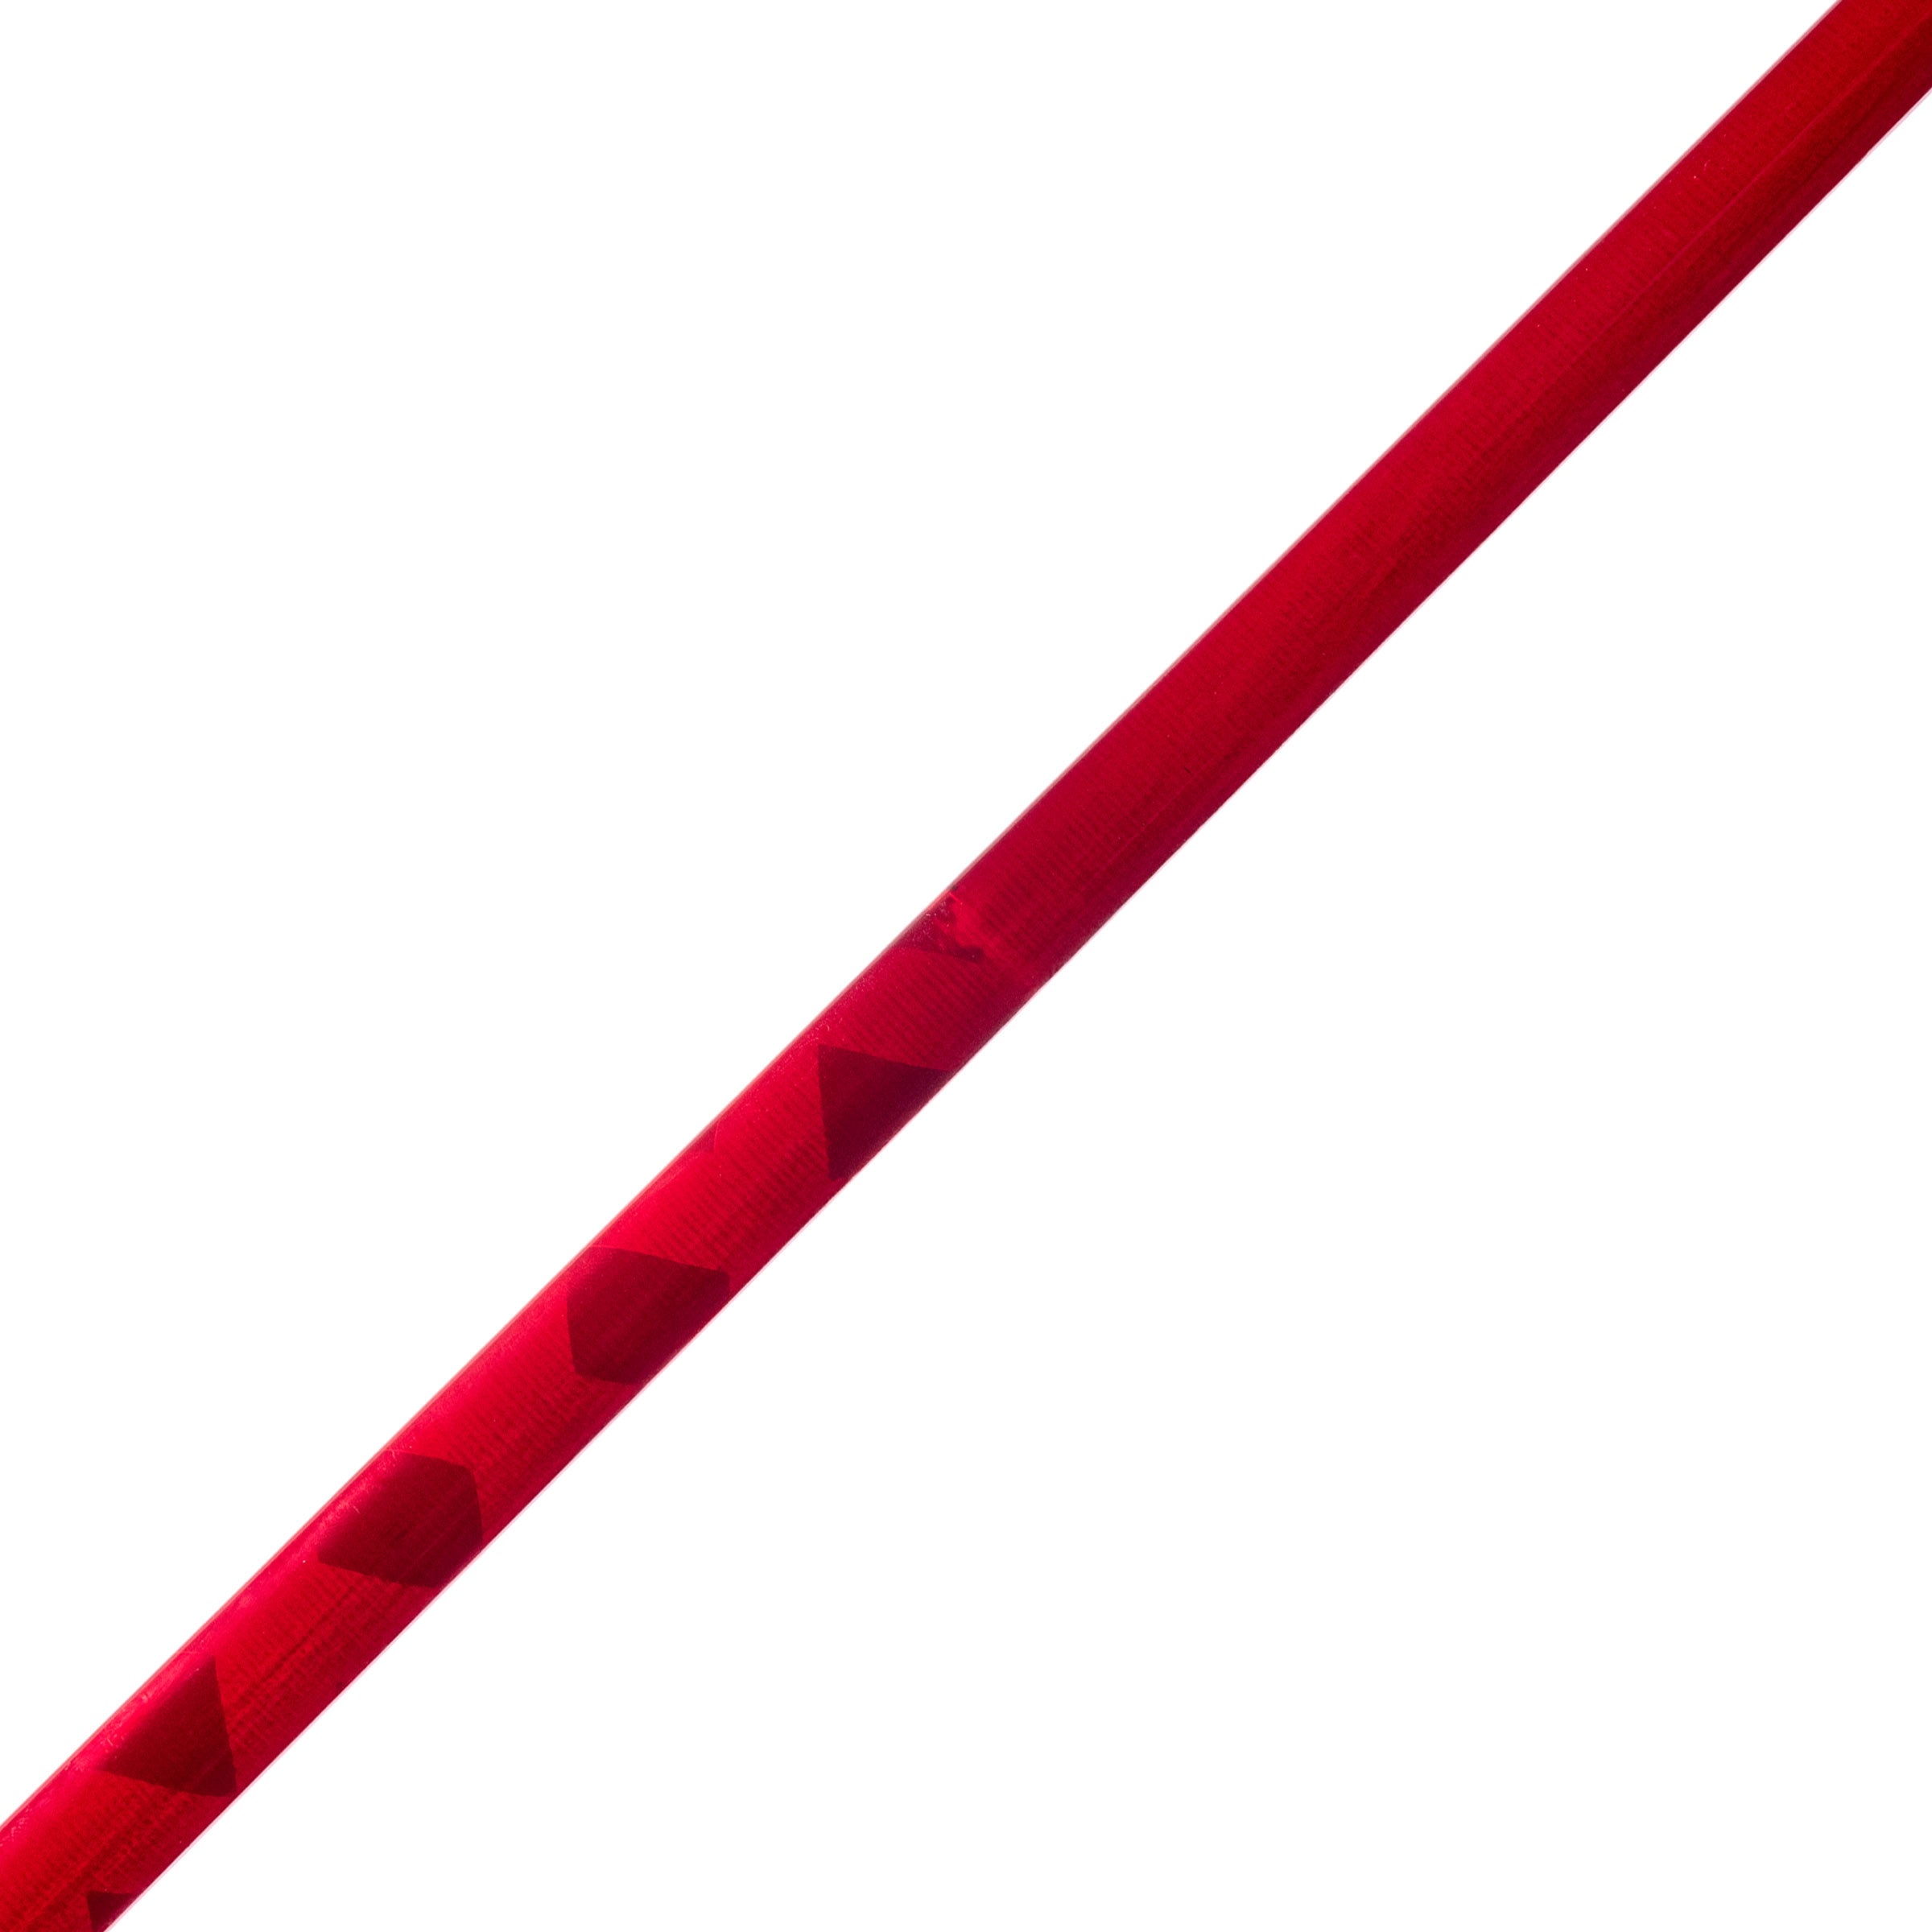 Phenix Glass Crankbait Blank, 7', 8-17lb, XG1-Glass-R (Red)